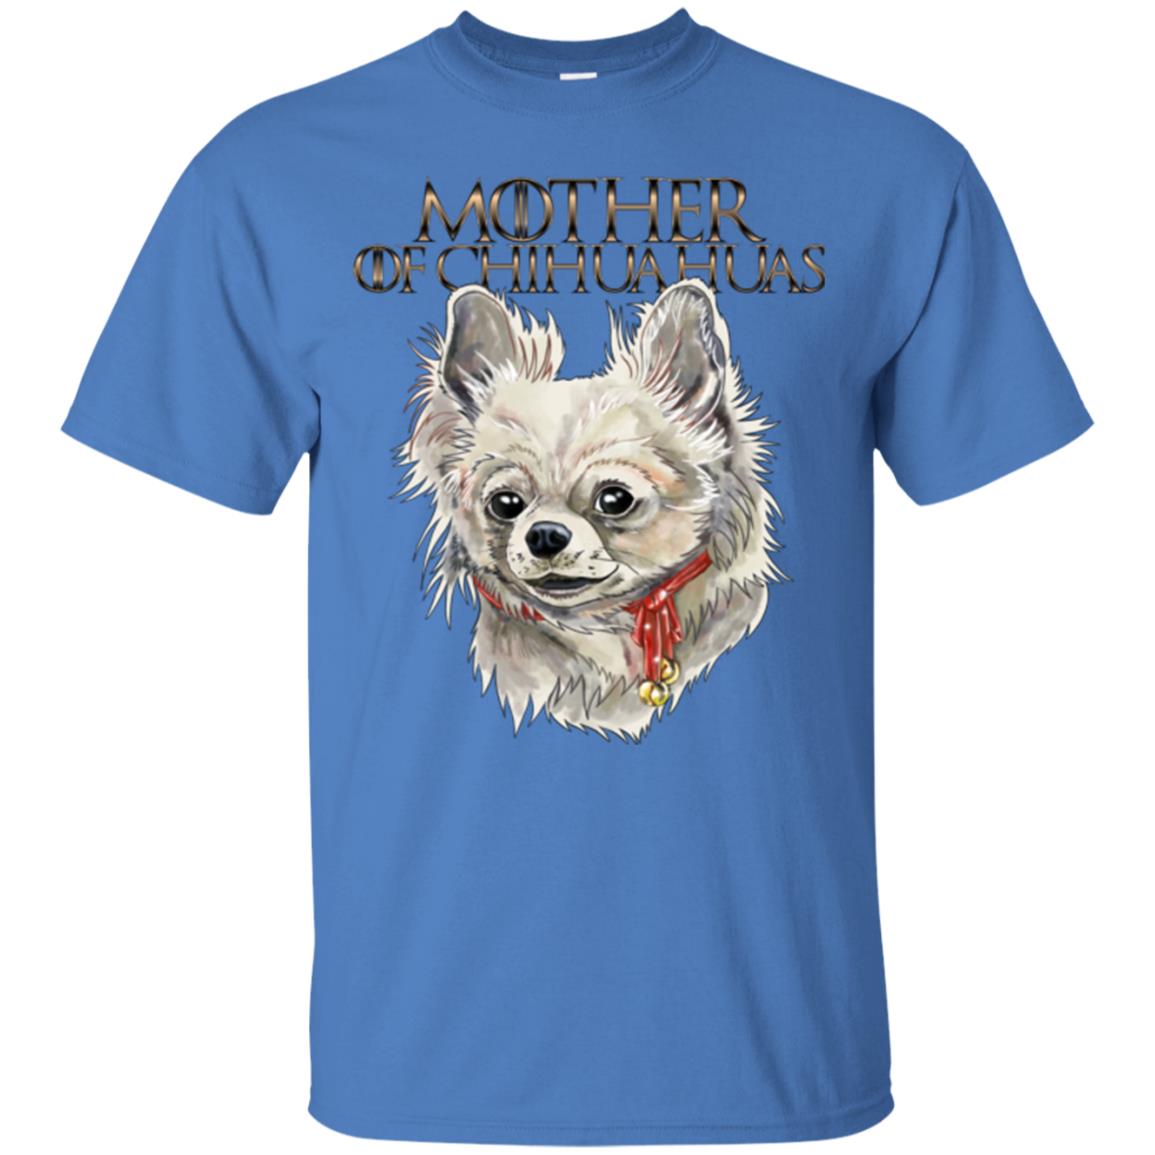 Chihuahua Shirt For Women, Girls - Mother of Chihuahuas - GoneBold.gift